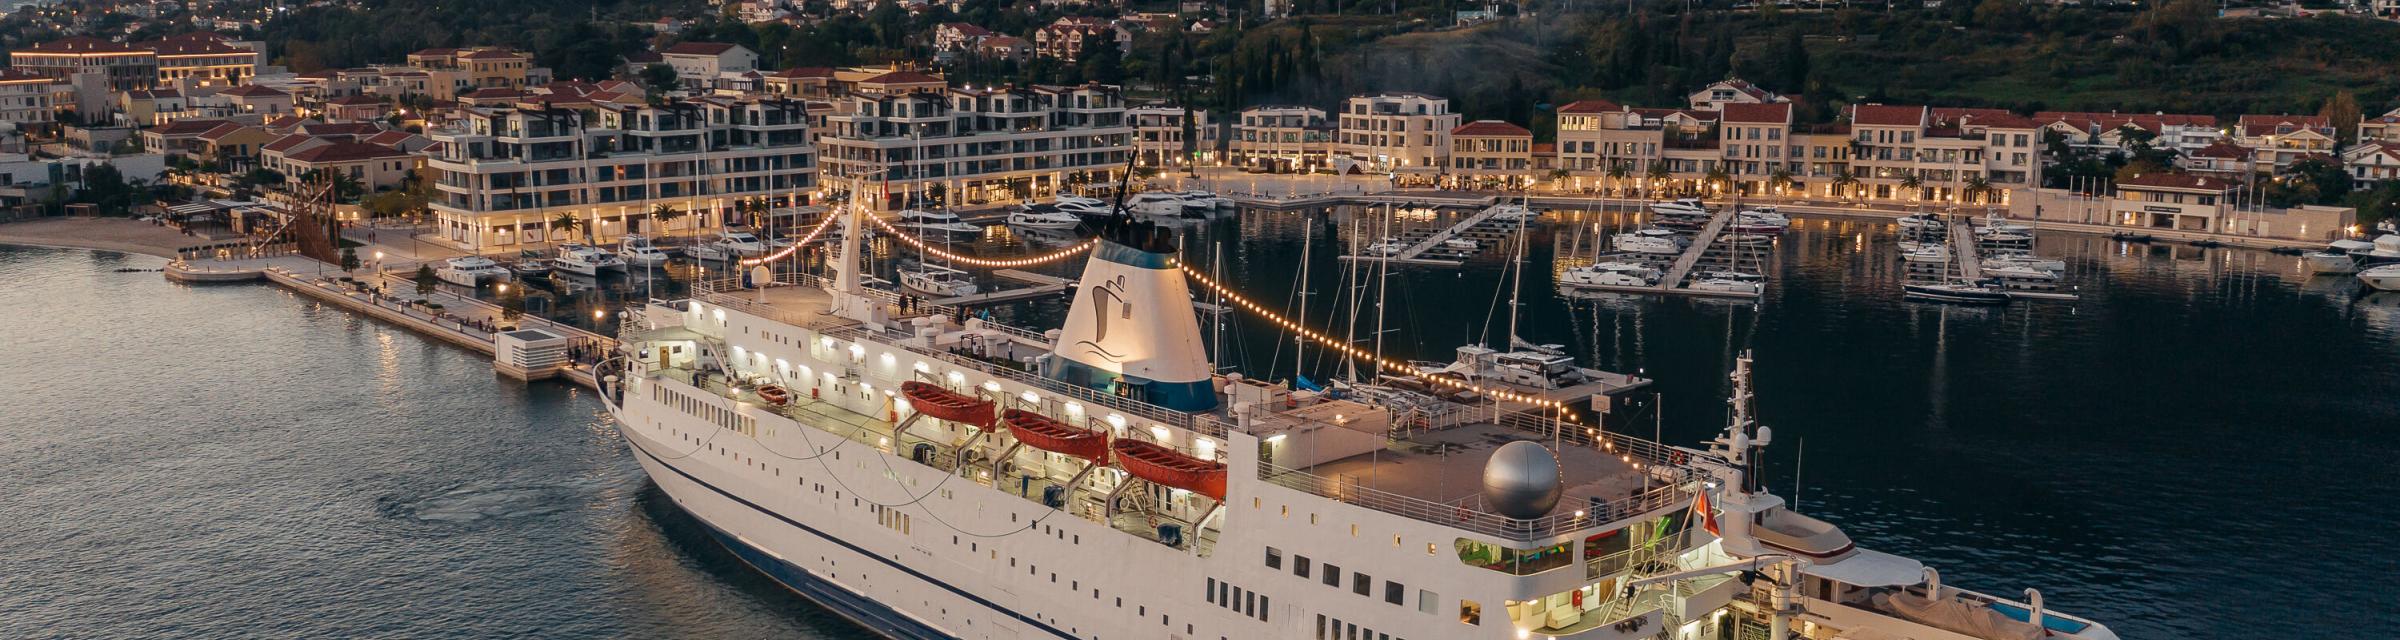 Portonovi, Montenegro :: Ship in port.